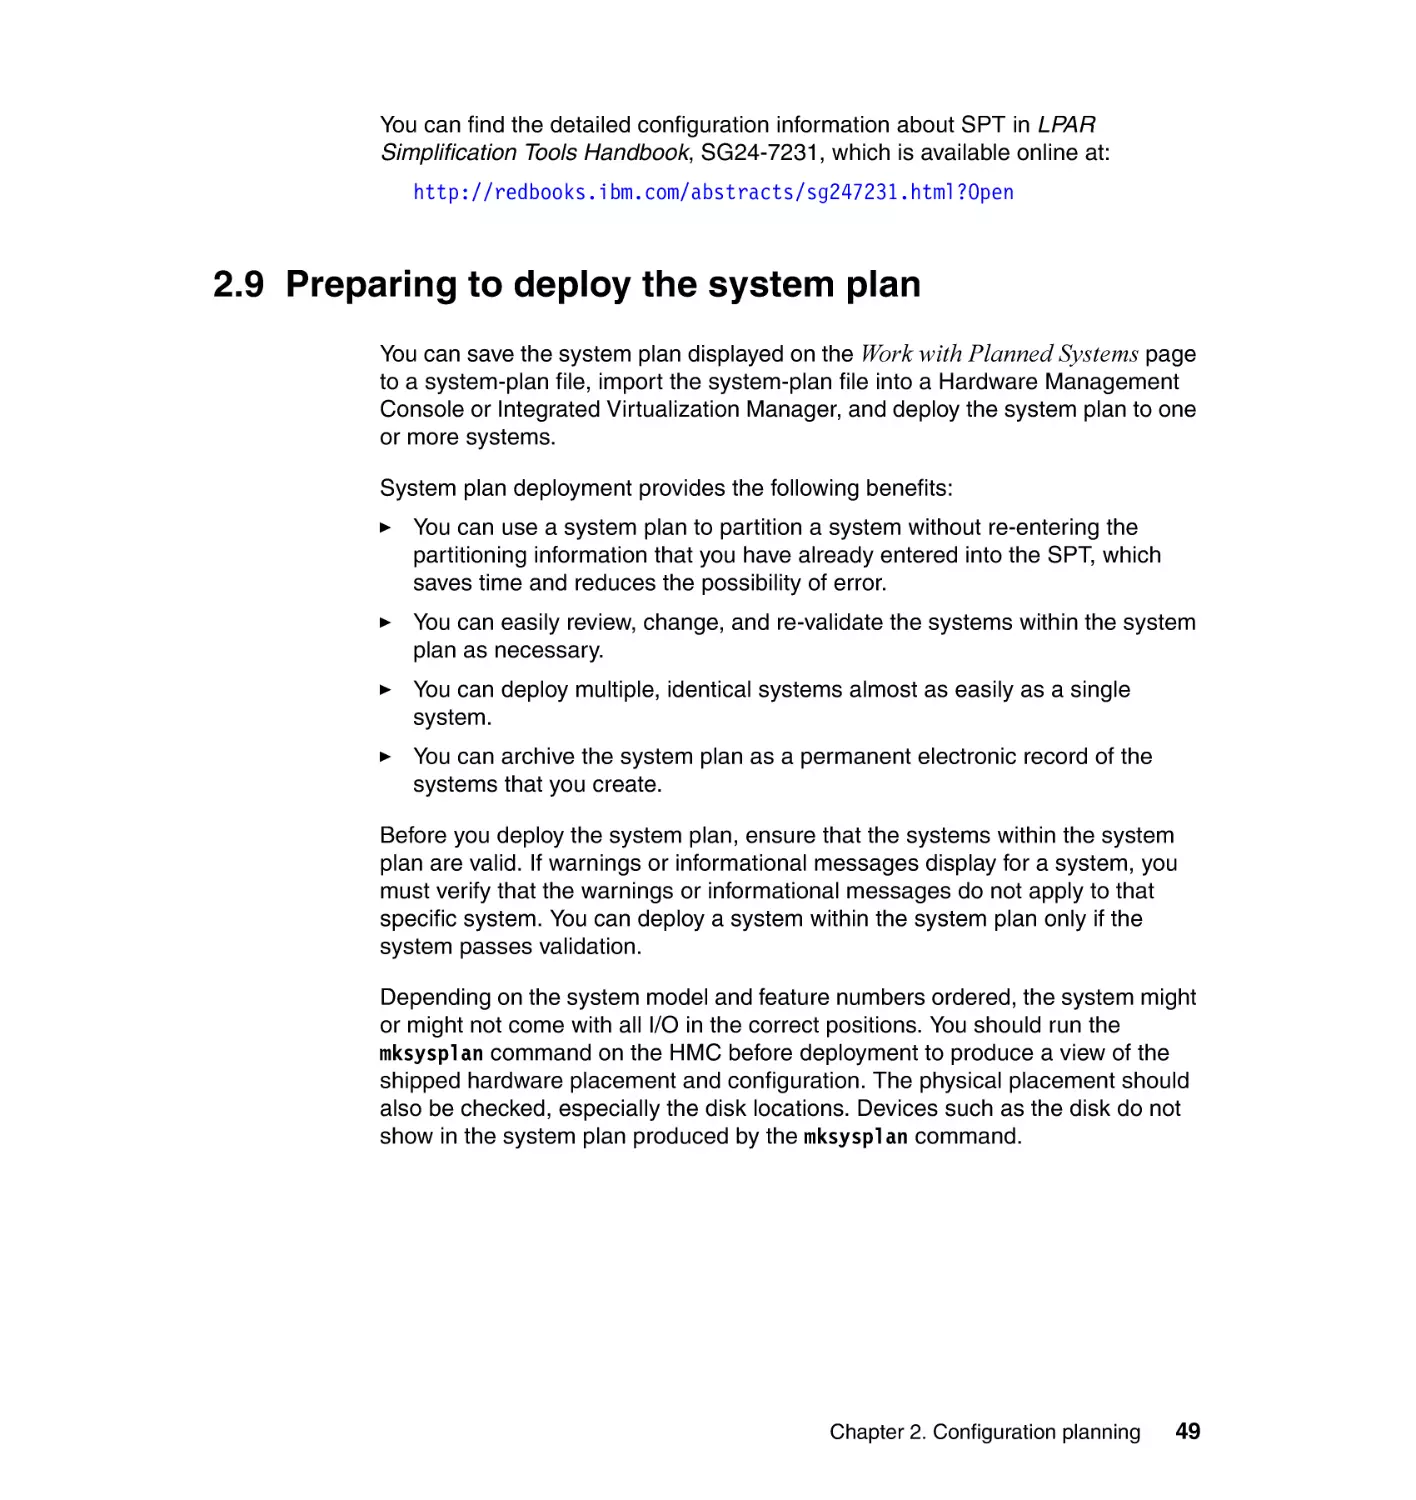 2.9 Preparing to deploy the system plan